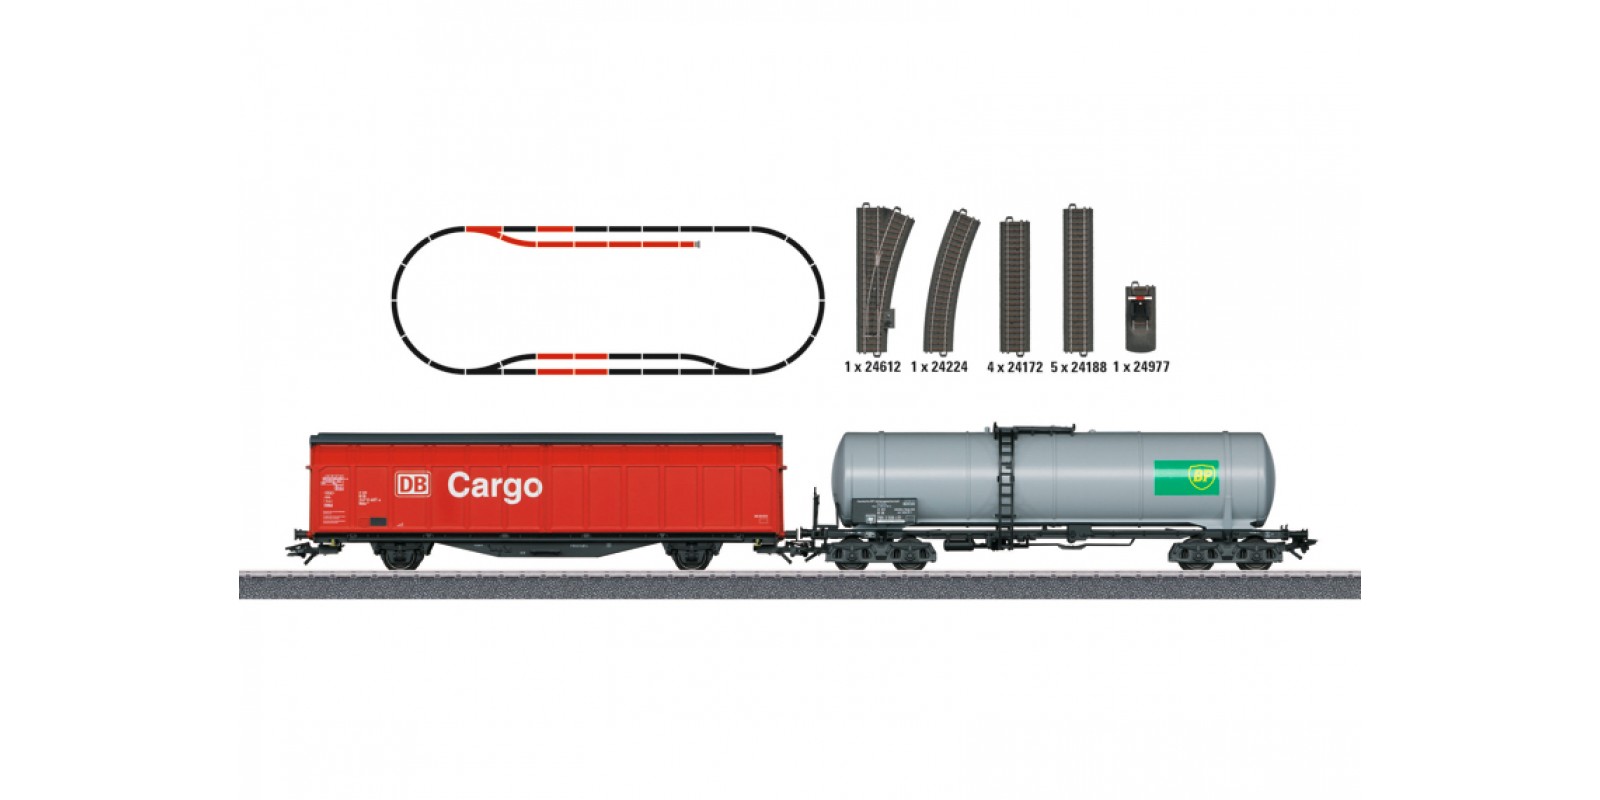 78841 "Modern Freight Service" Theme Extension Set